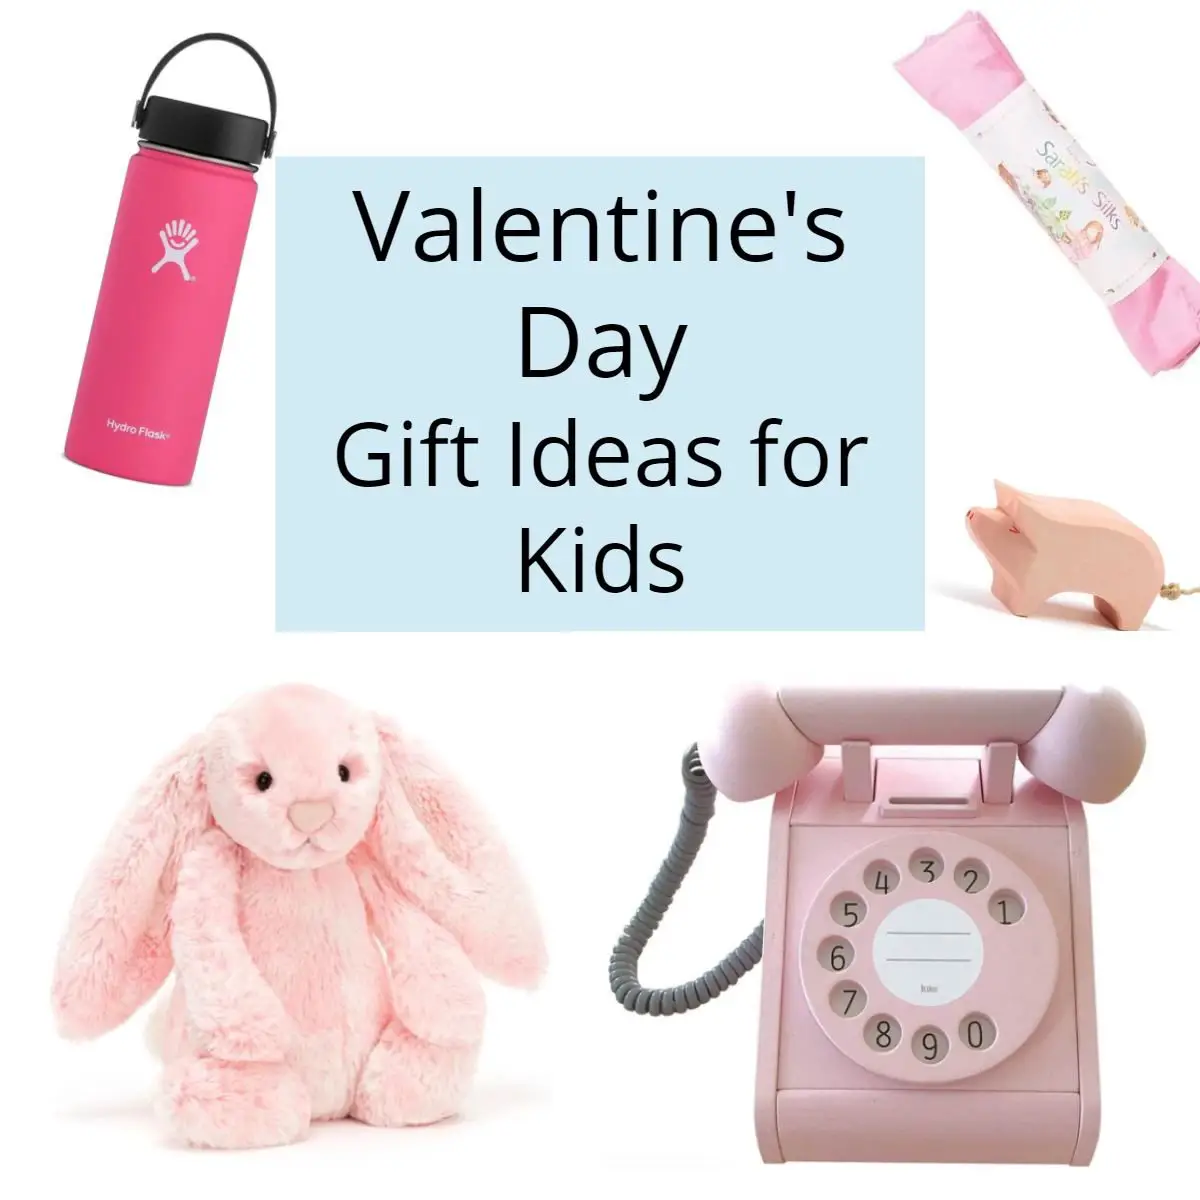 Valentine's Day Gift Ideas for Kids 2020